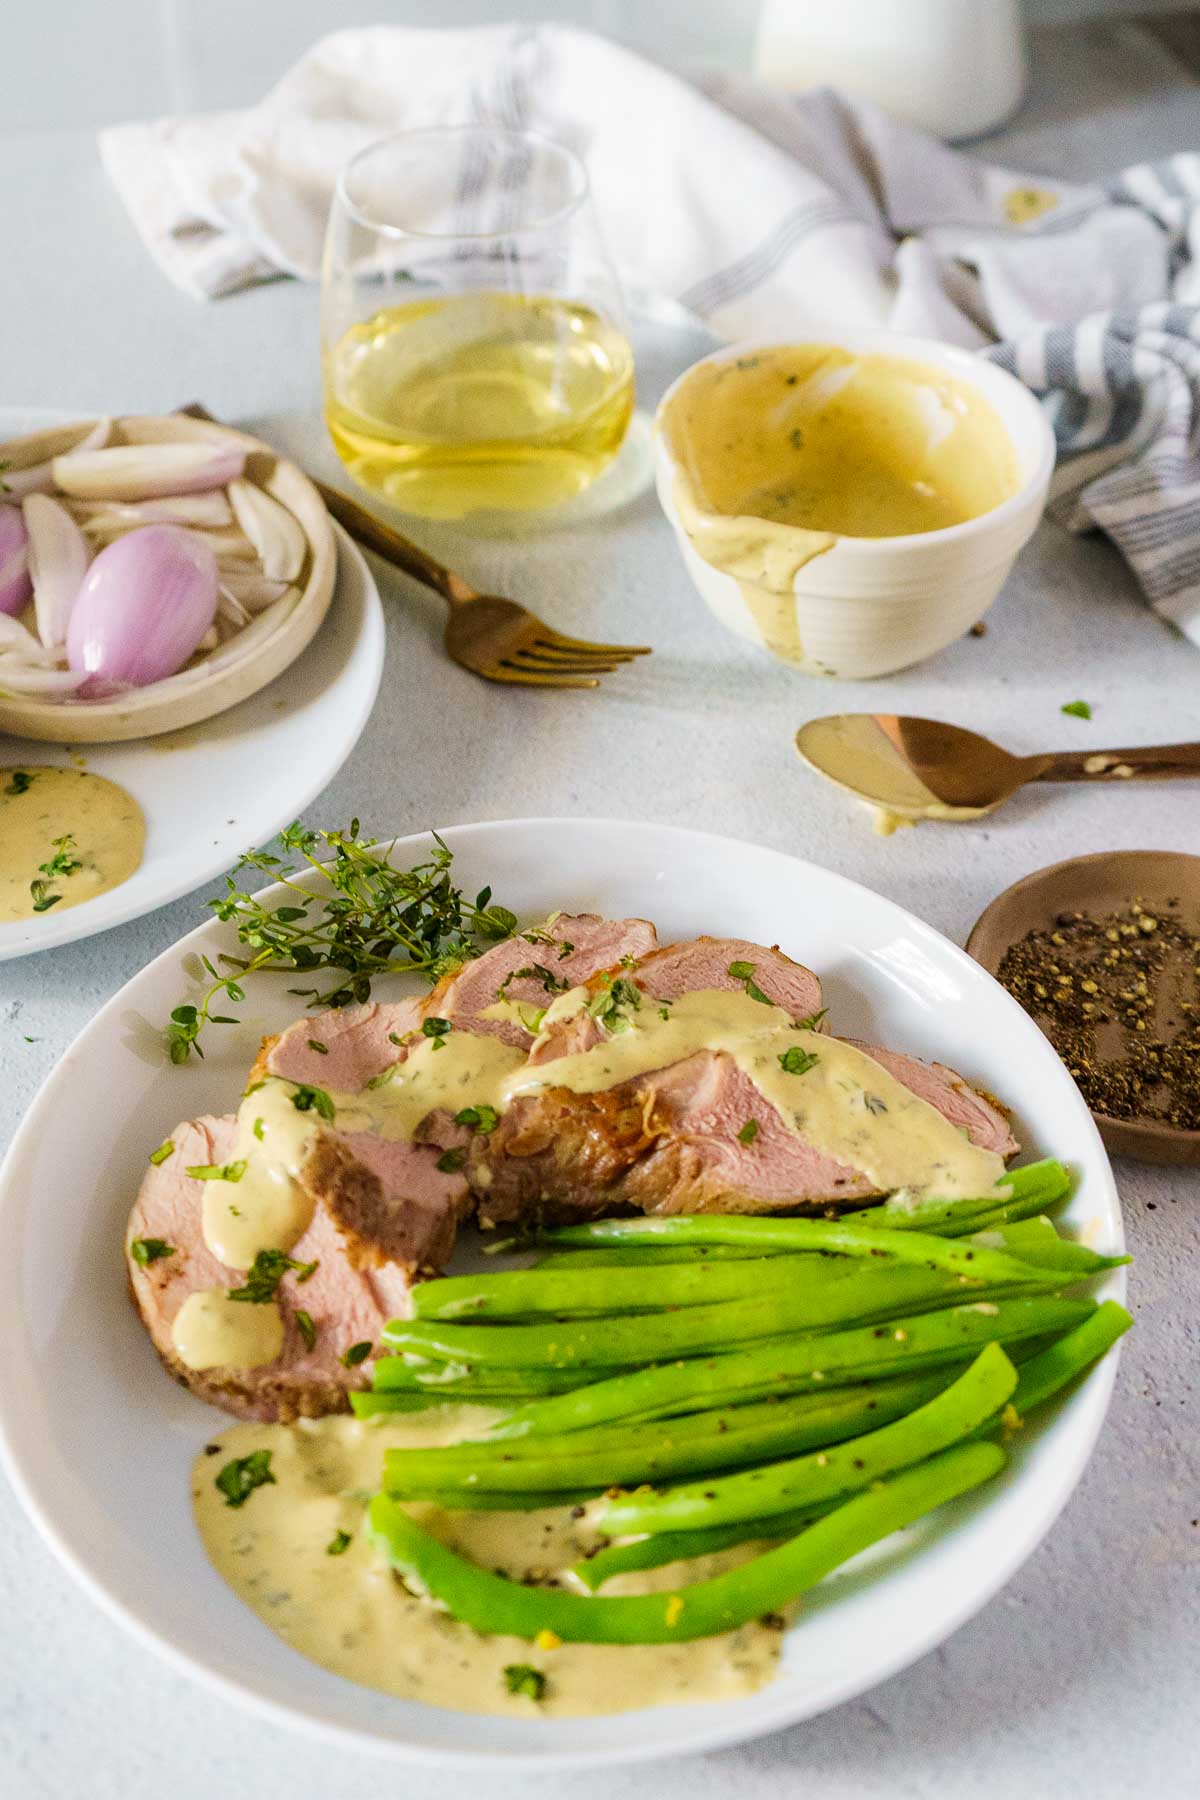 sous vide pork tenderloin with green beans and a mustard sauce on a dinner plate